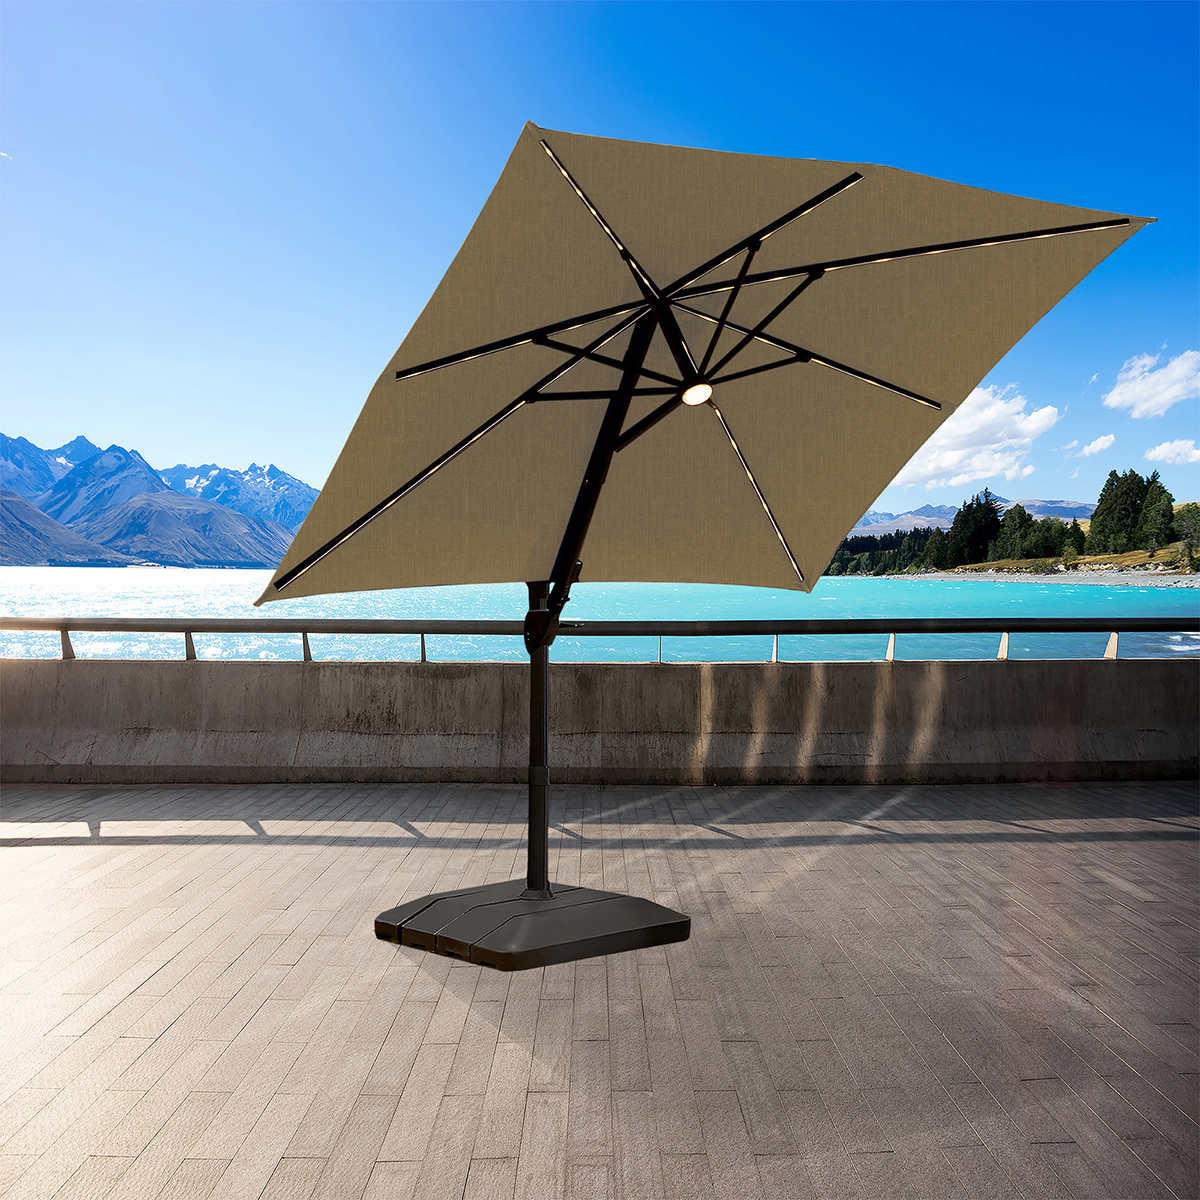 Seasons Sentry 3.05 m (10 ft.) Square Solar LED Cantilever Umbrella